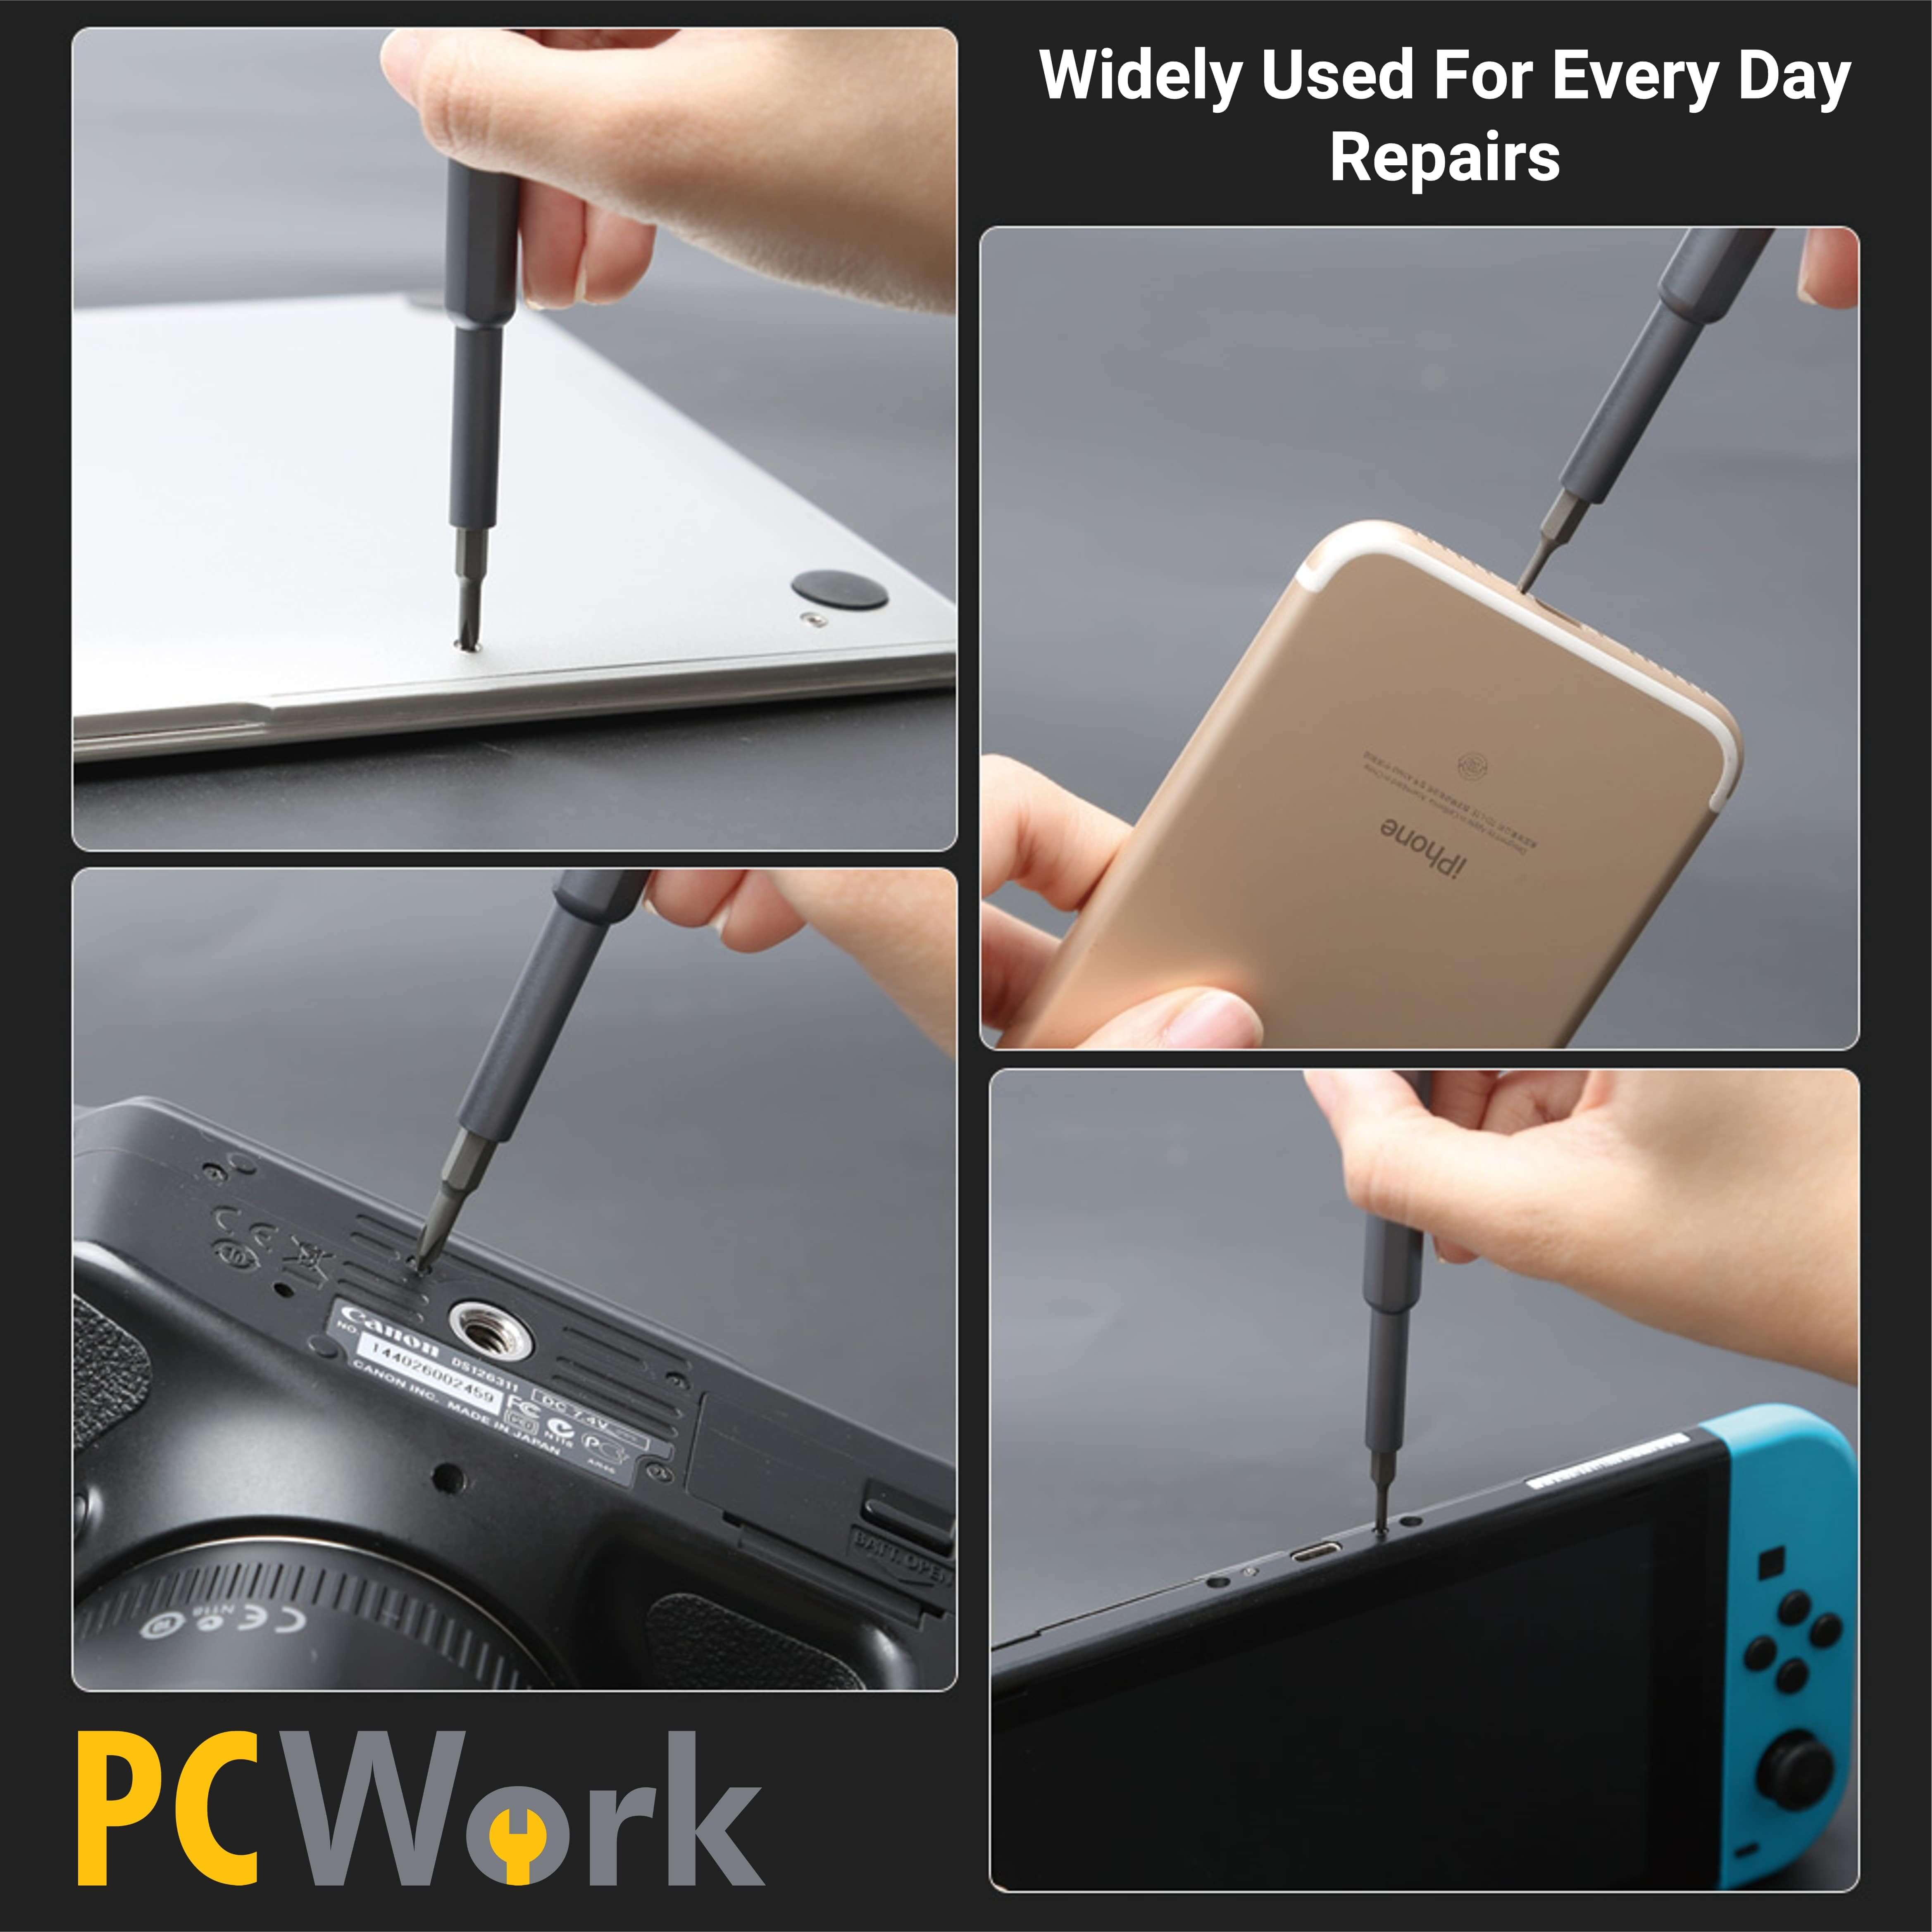 PCW08A Premium-Präzisionswerkzeug-Set, 30-teilig